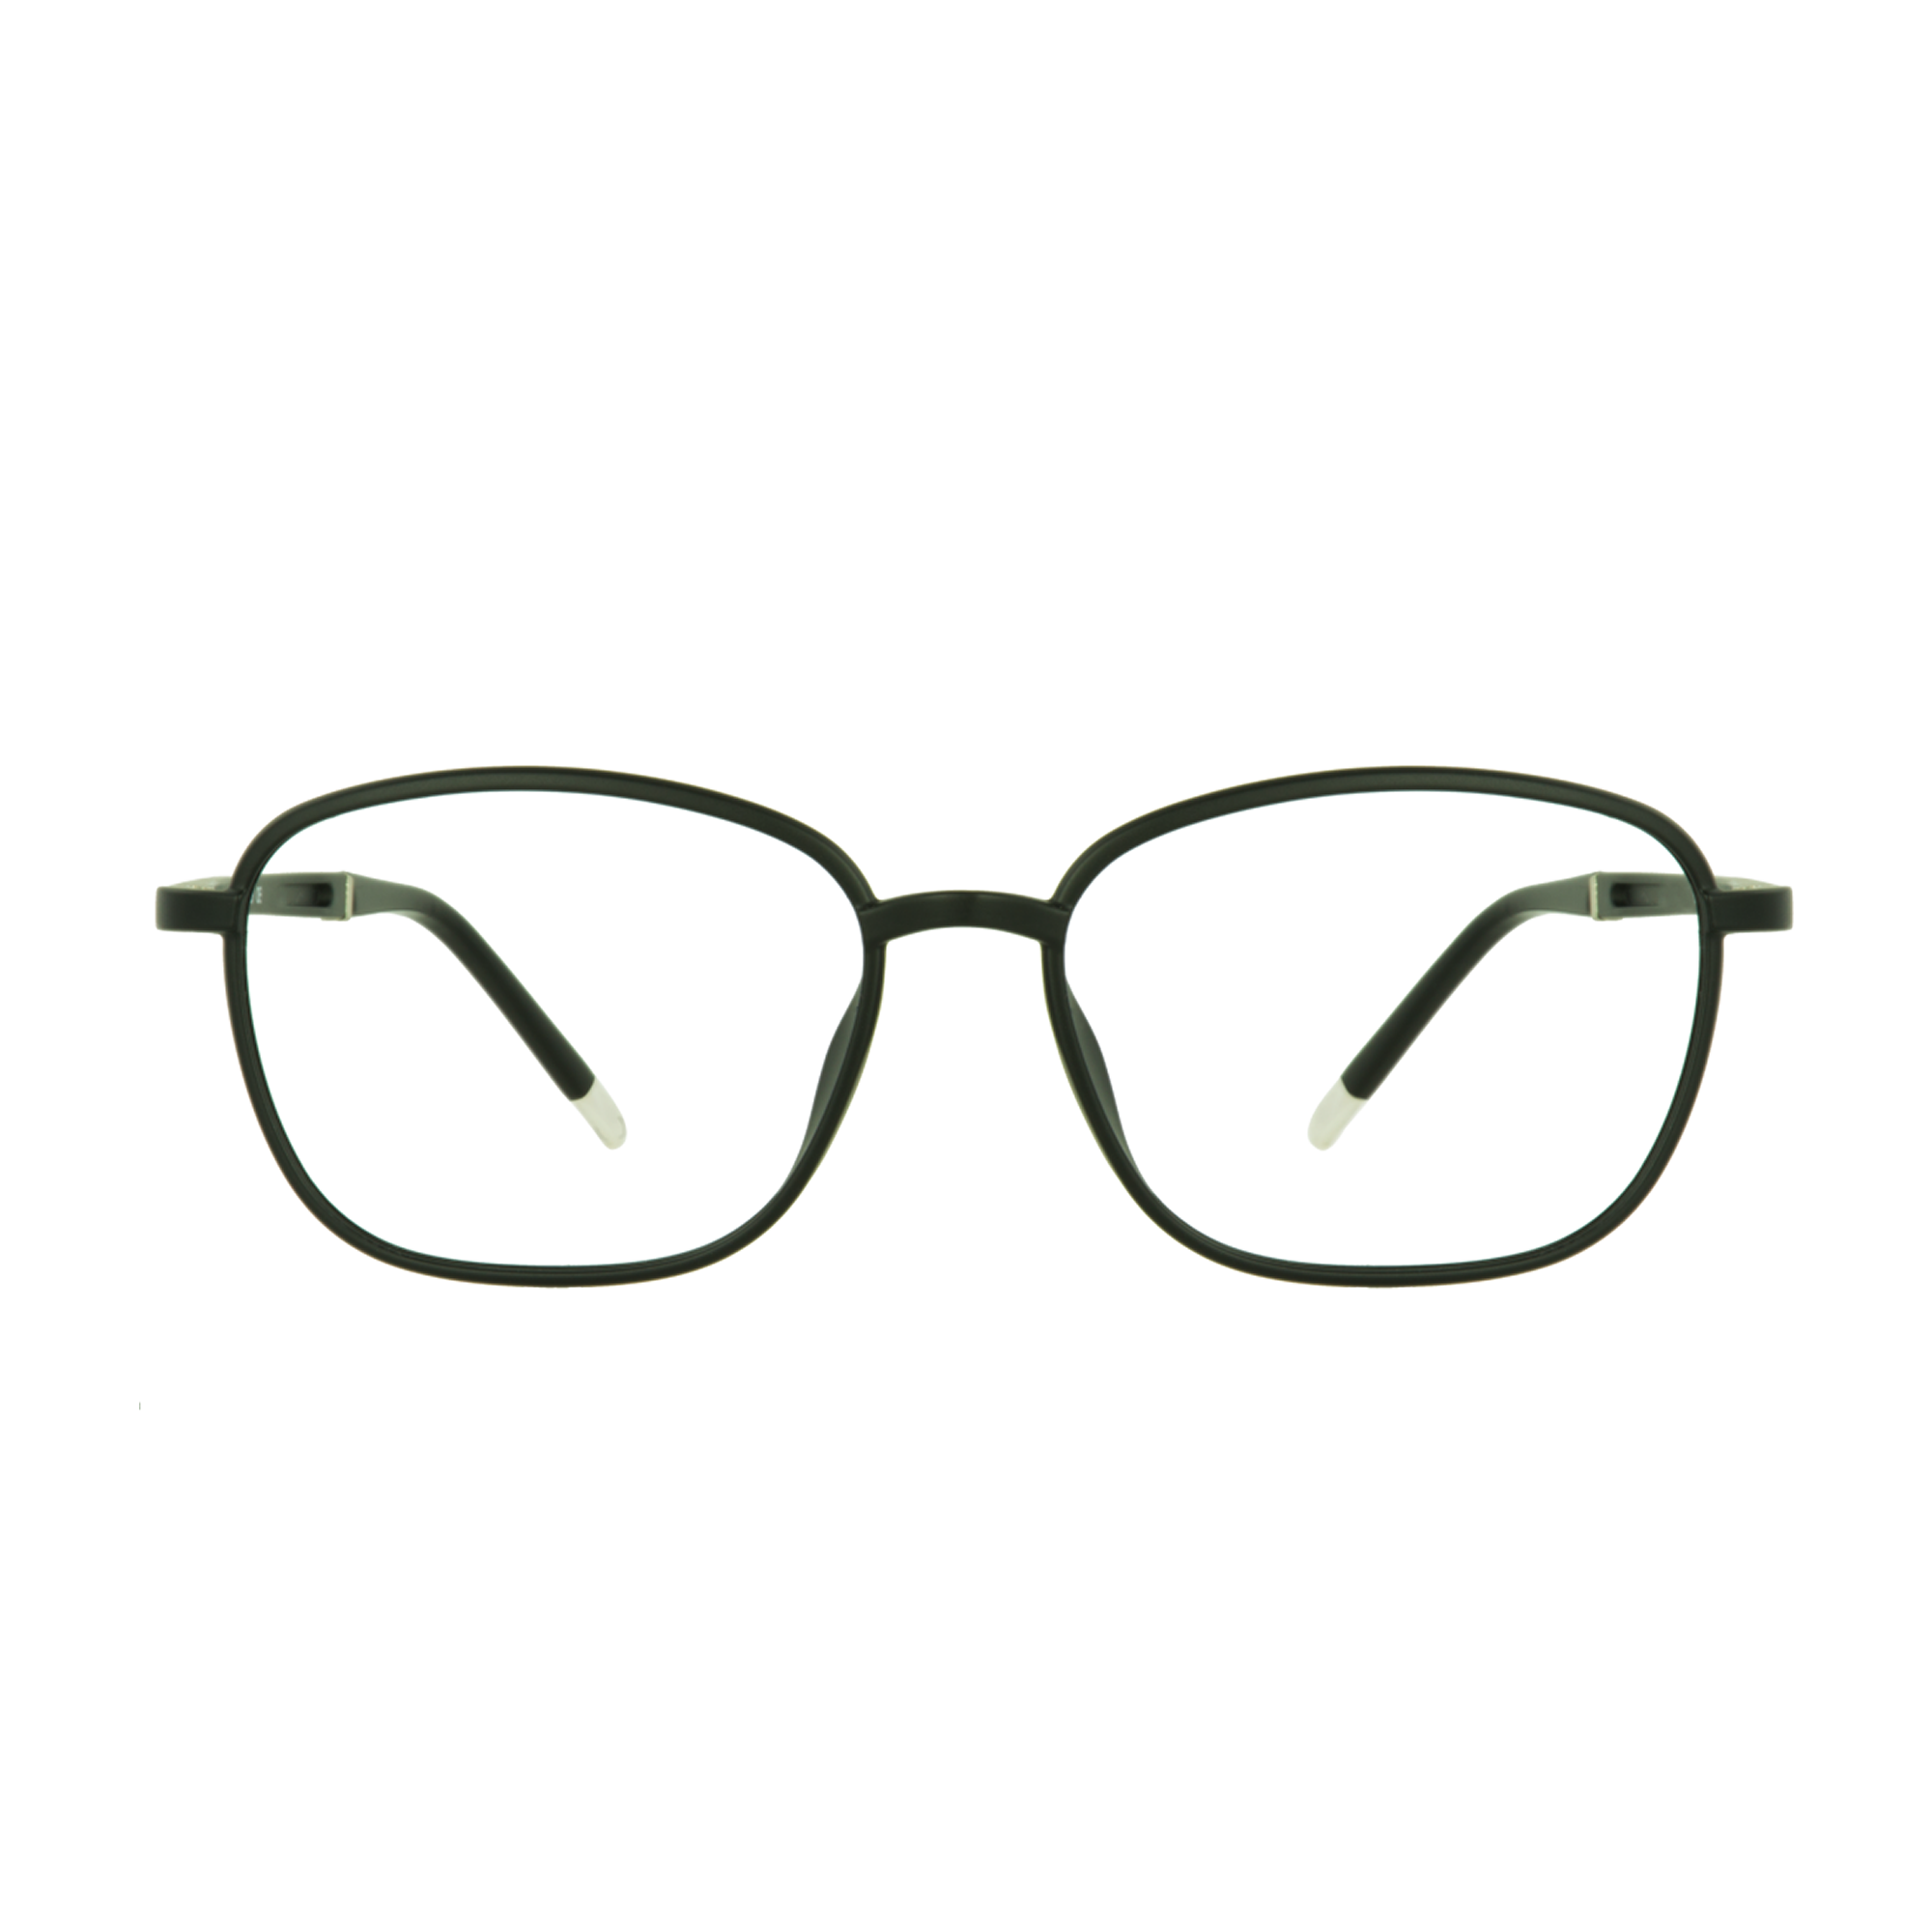 Sample Glasses 10